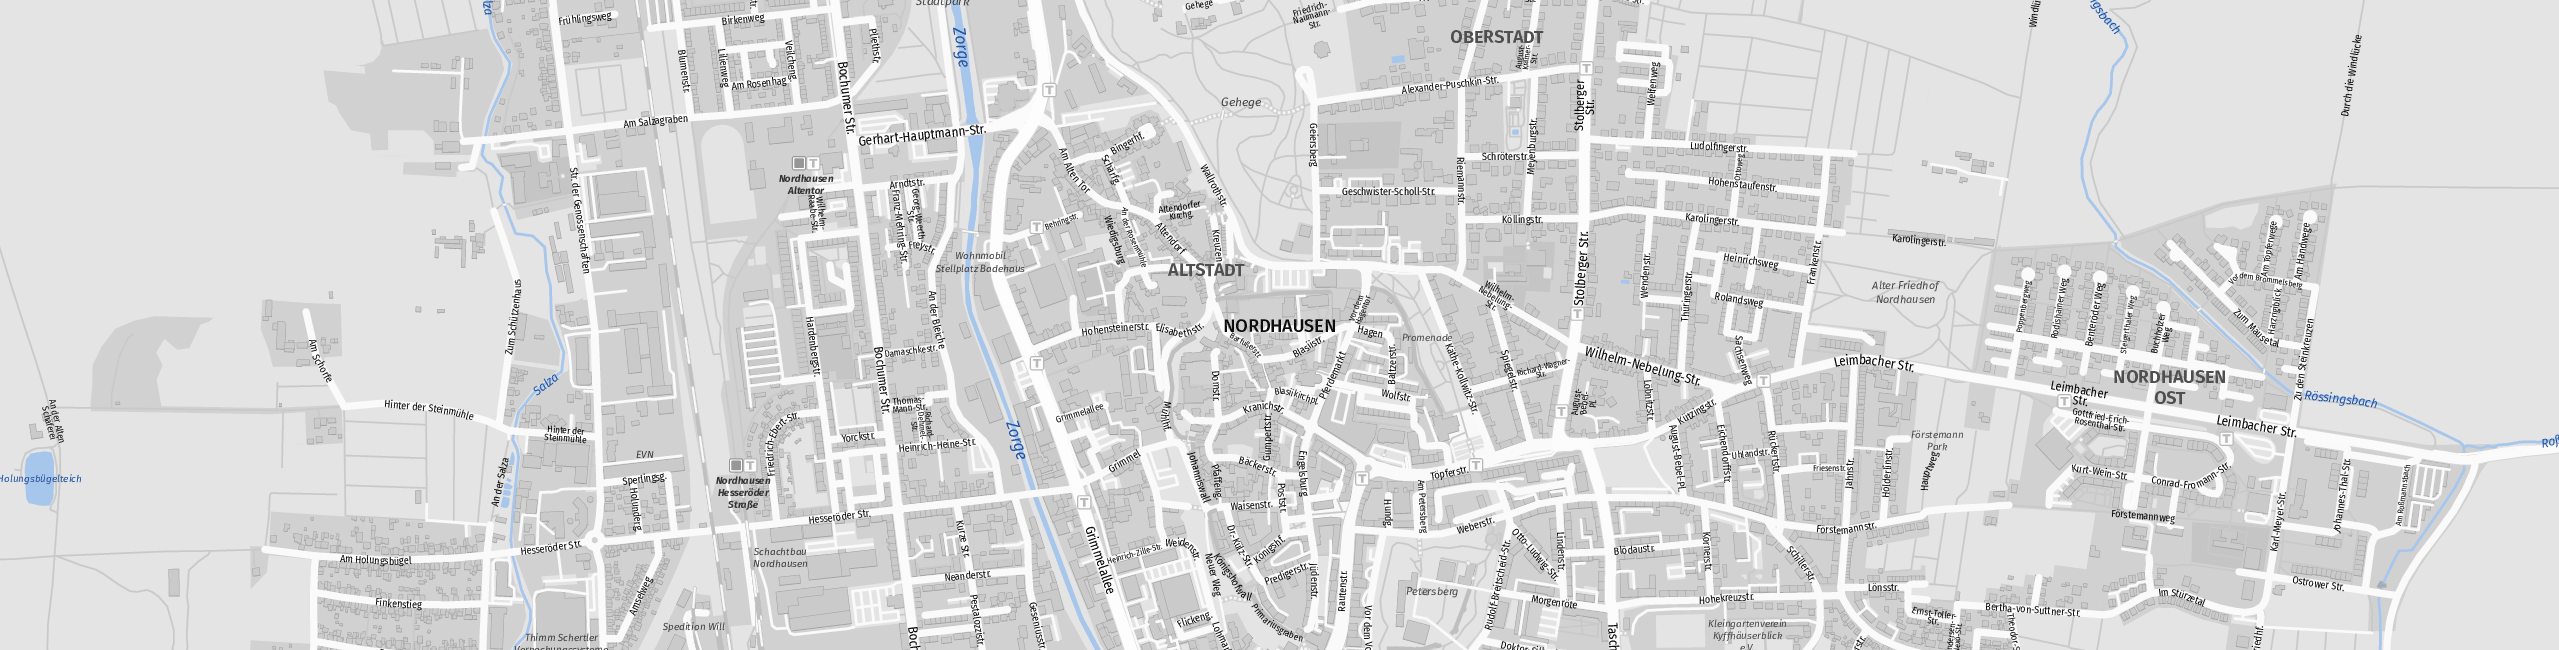 Stadtplan Nordhausen zum Downloaden.